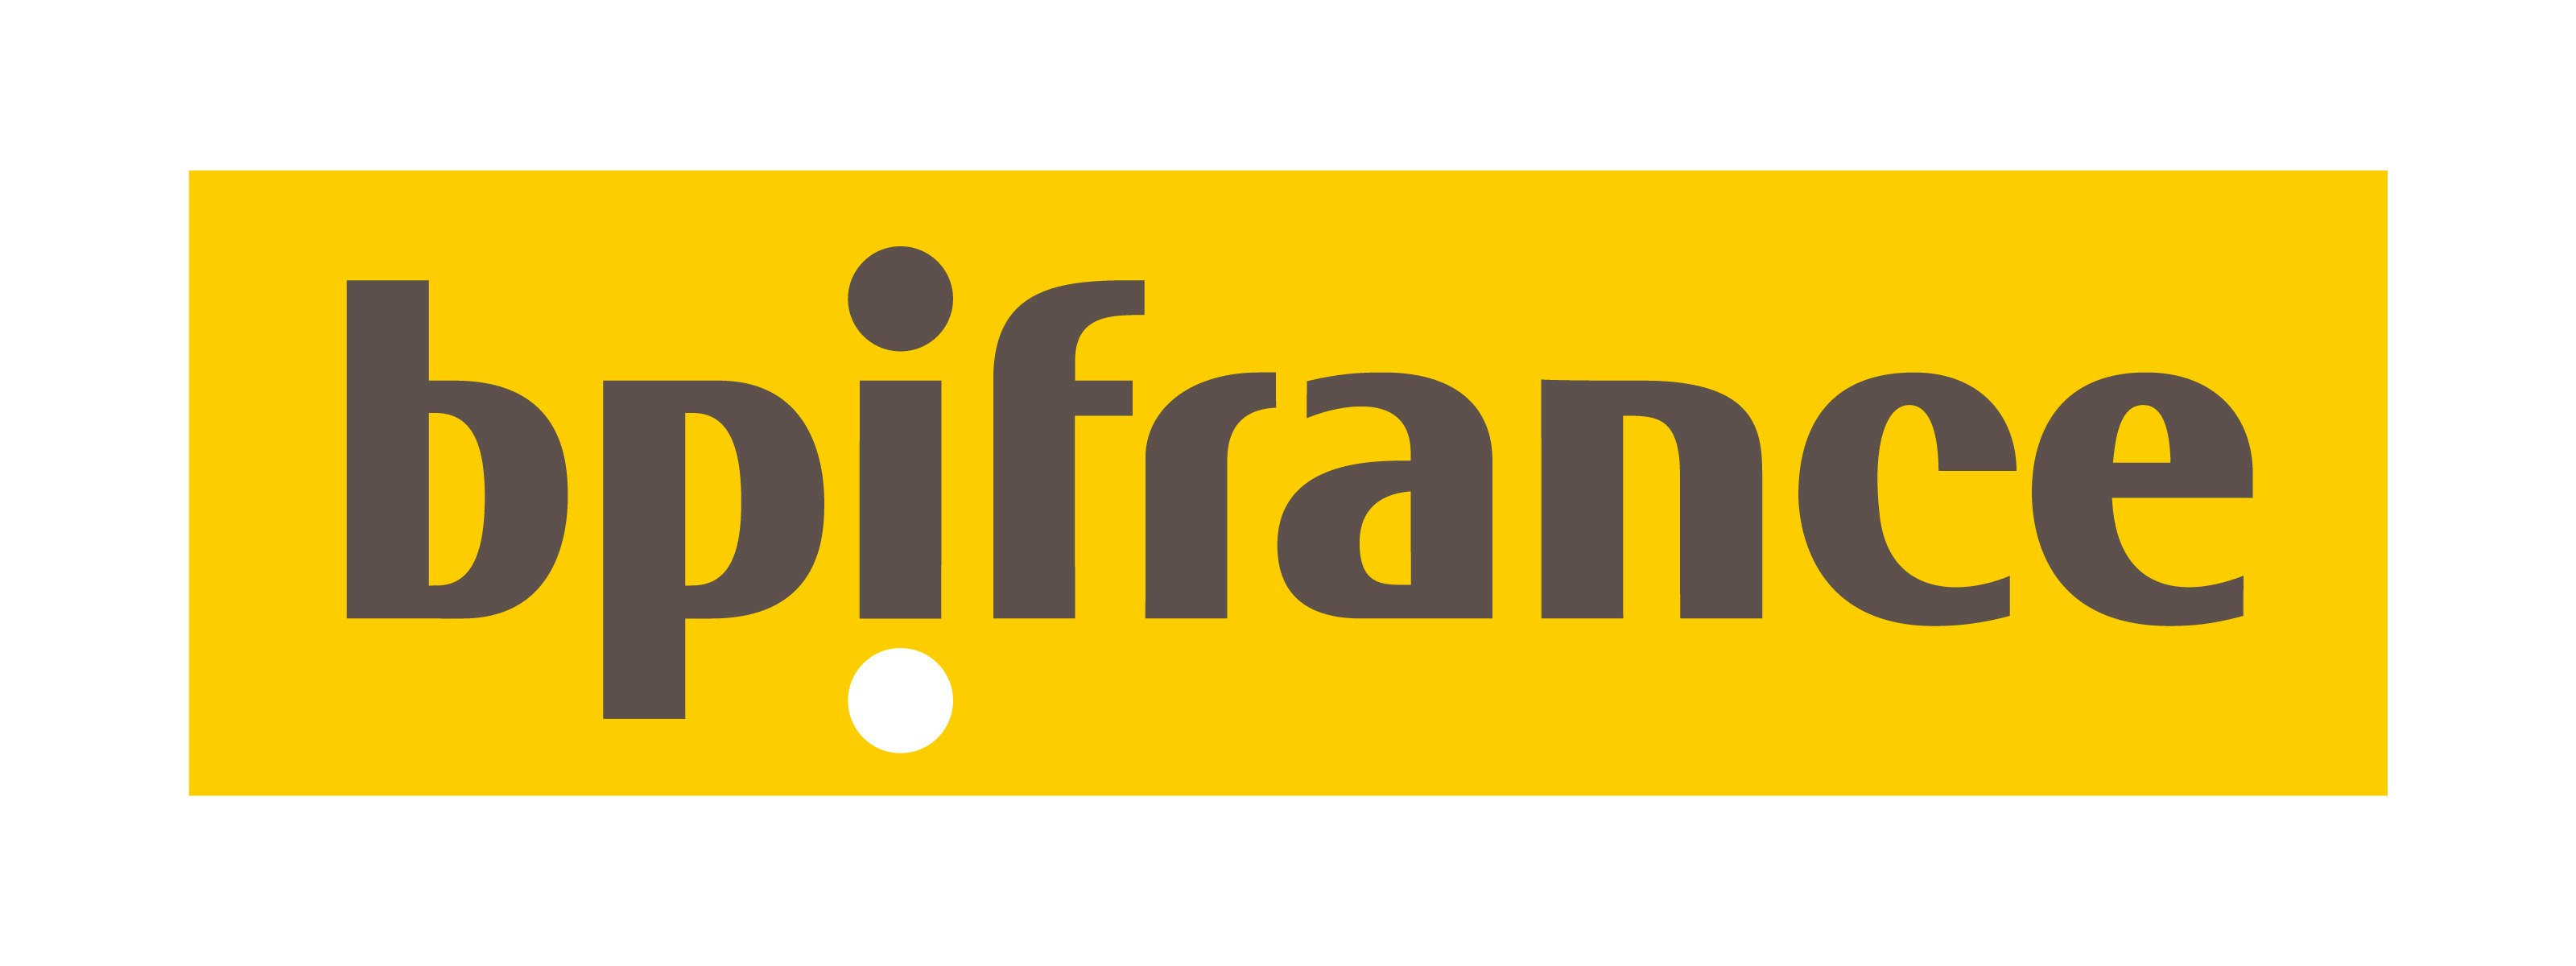 Logo Bpifrance Partenaire Sans Baseline Web 2